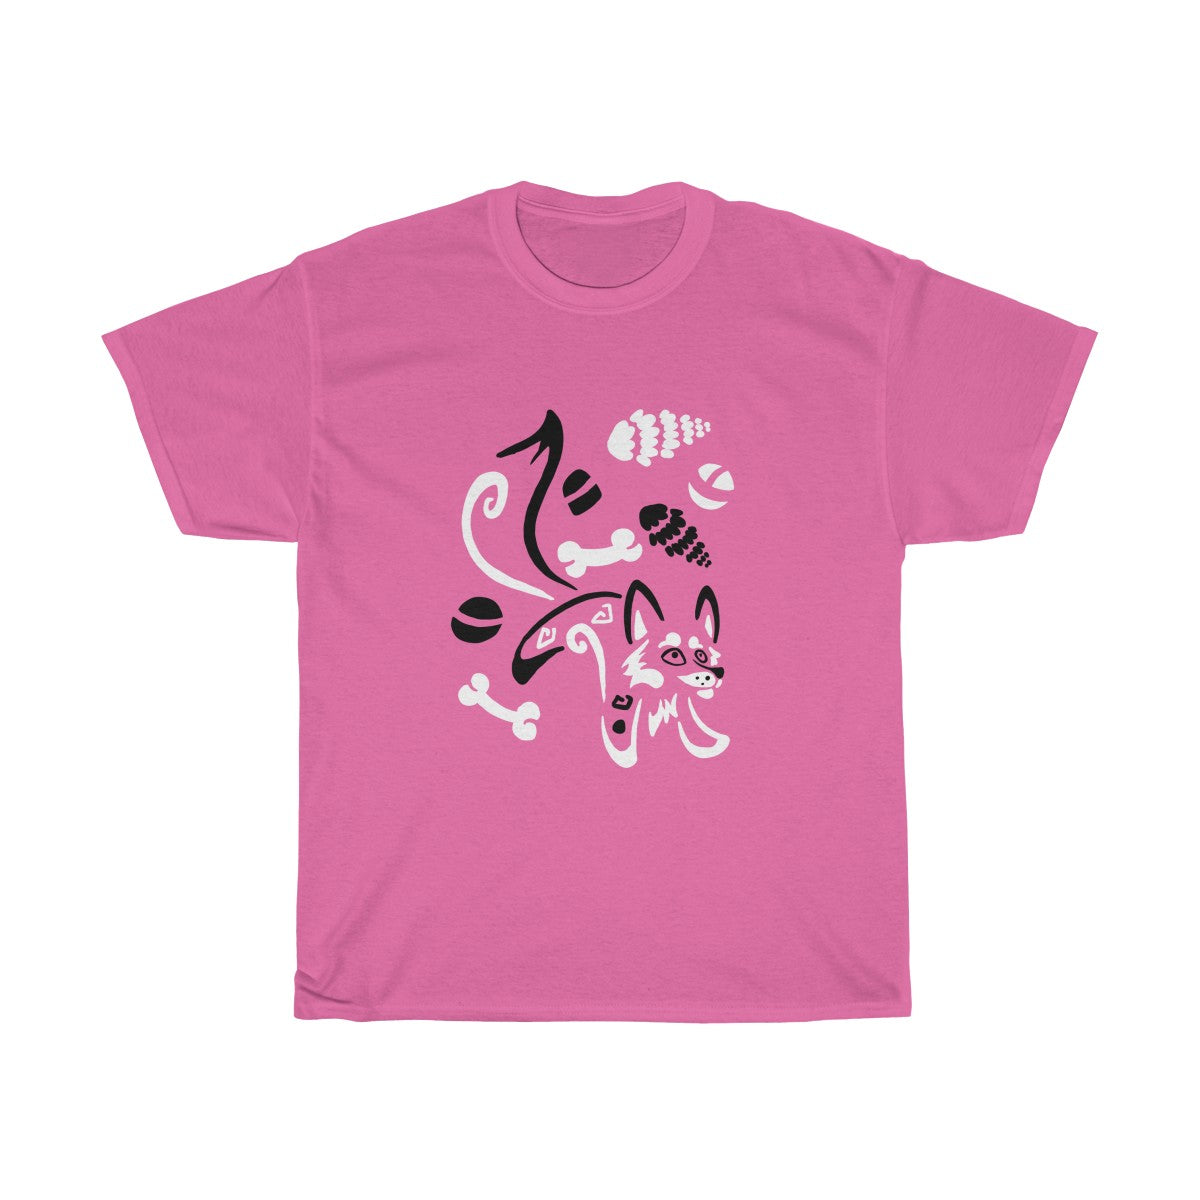 Yotes & Bones - T-Shirt T-Shirt Dire Creatures Pink S 